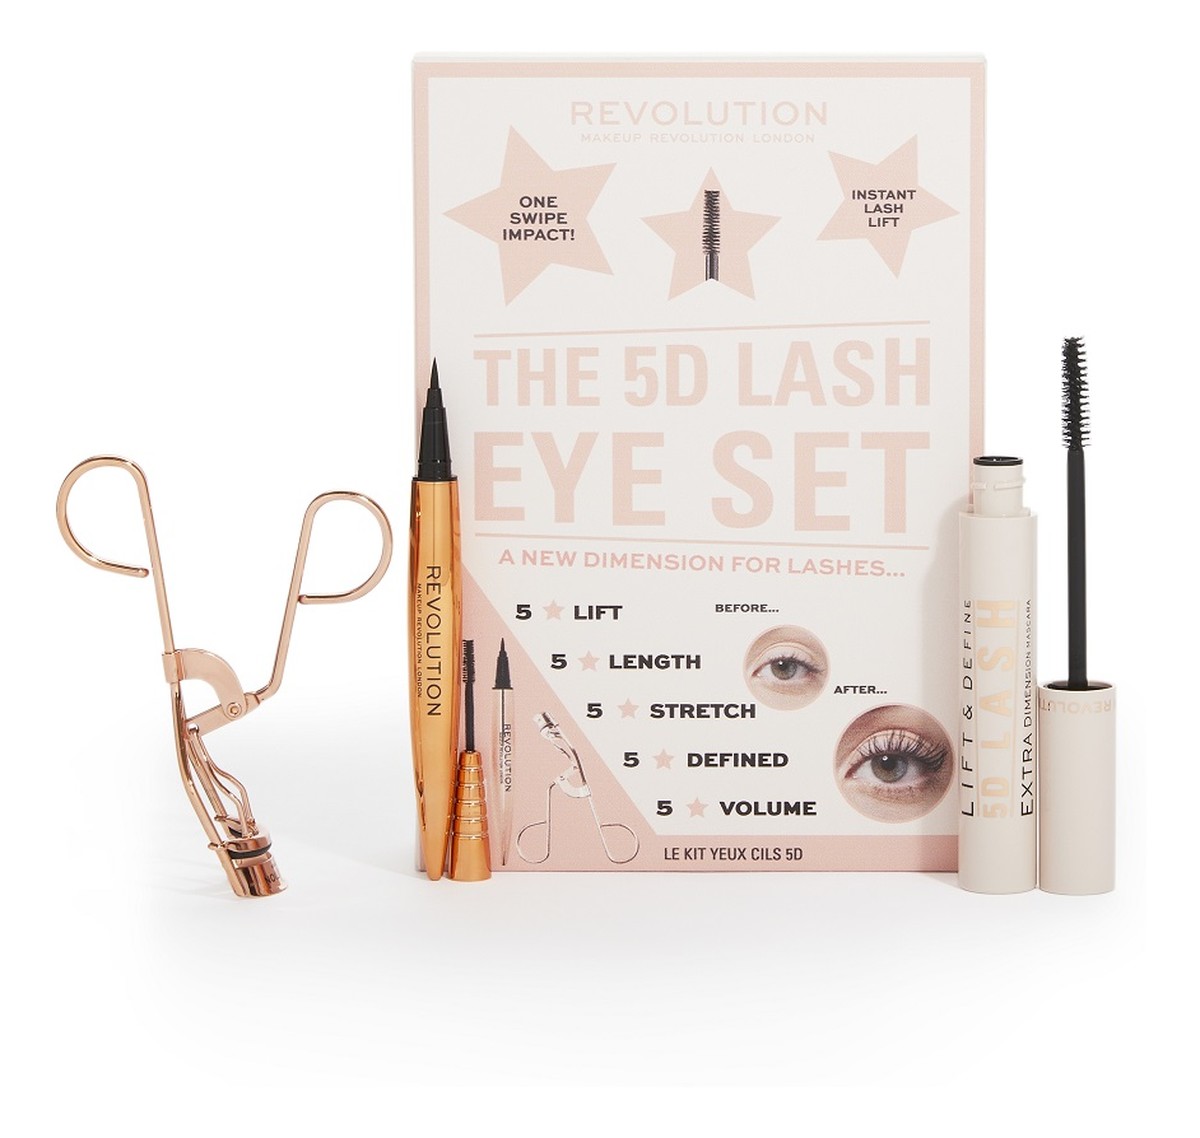 Zestaw lift & define 5d lash mascara tusz do rzęs + renaissance flick eyeliner w pisaku + rose gold eyelash curlers zalotka do rzęs